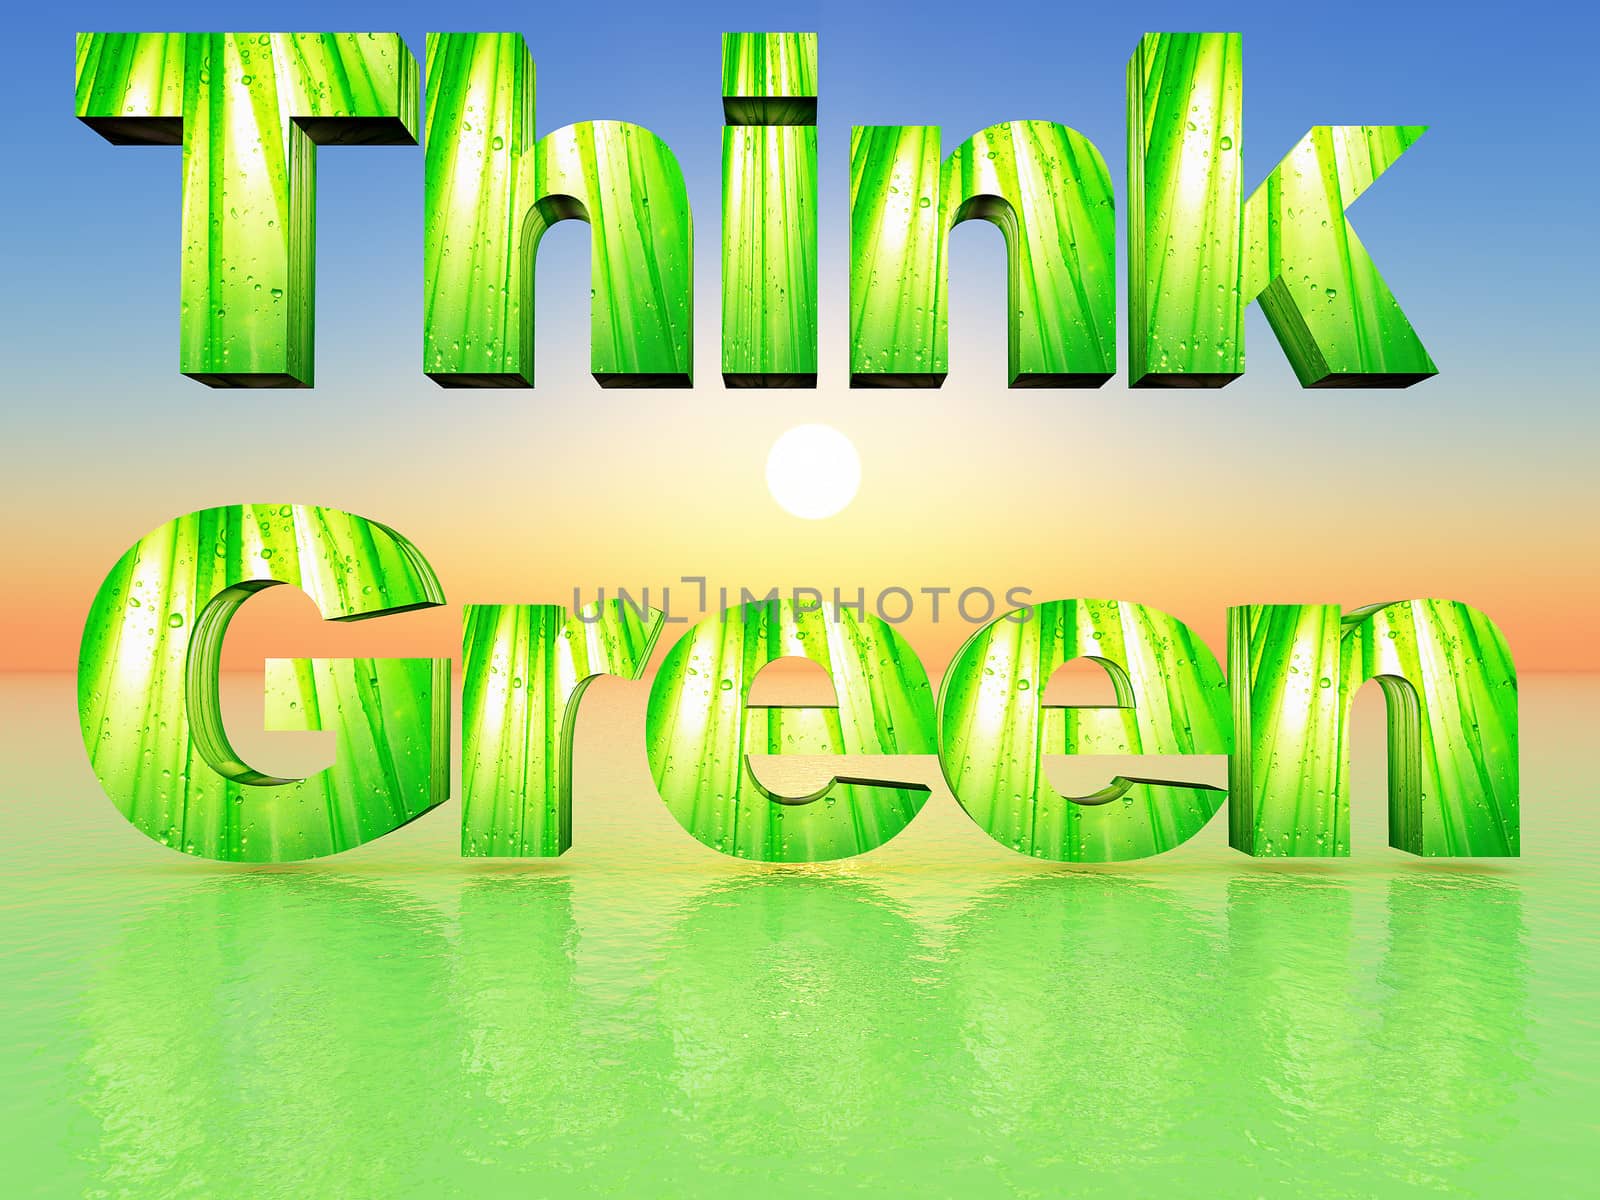 think green by gufoto